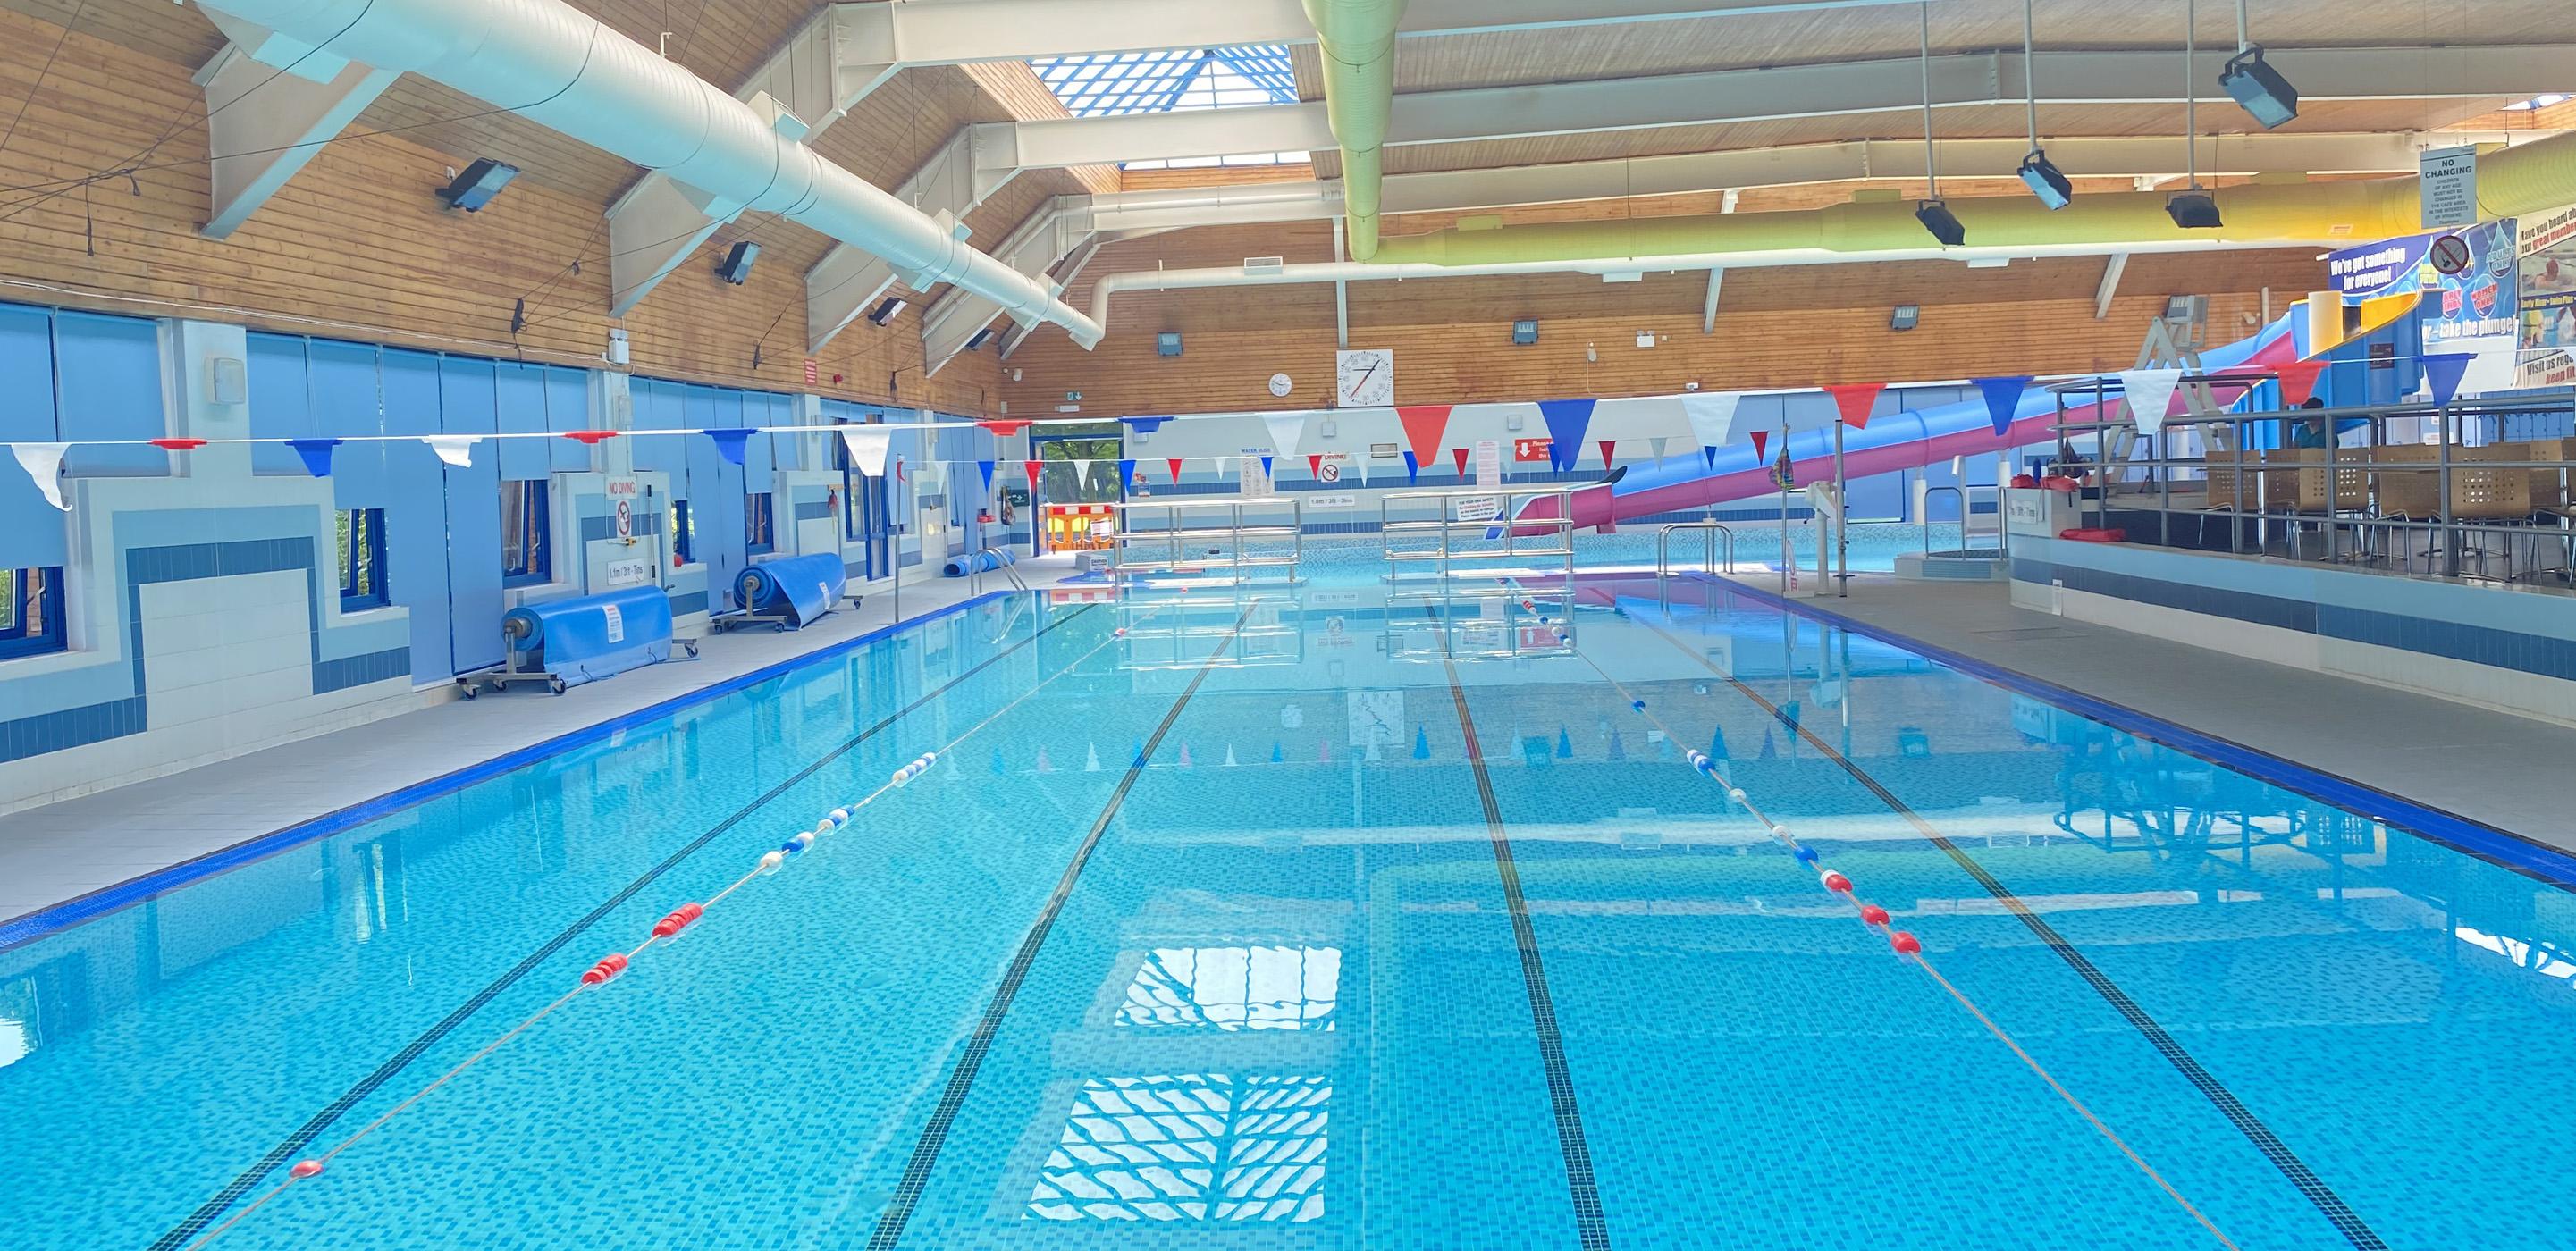 Knaresborough Pool internal image